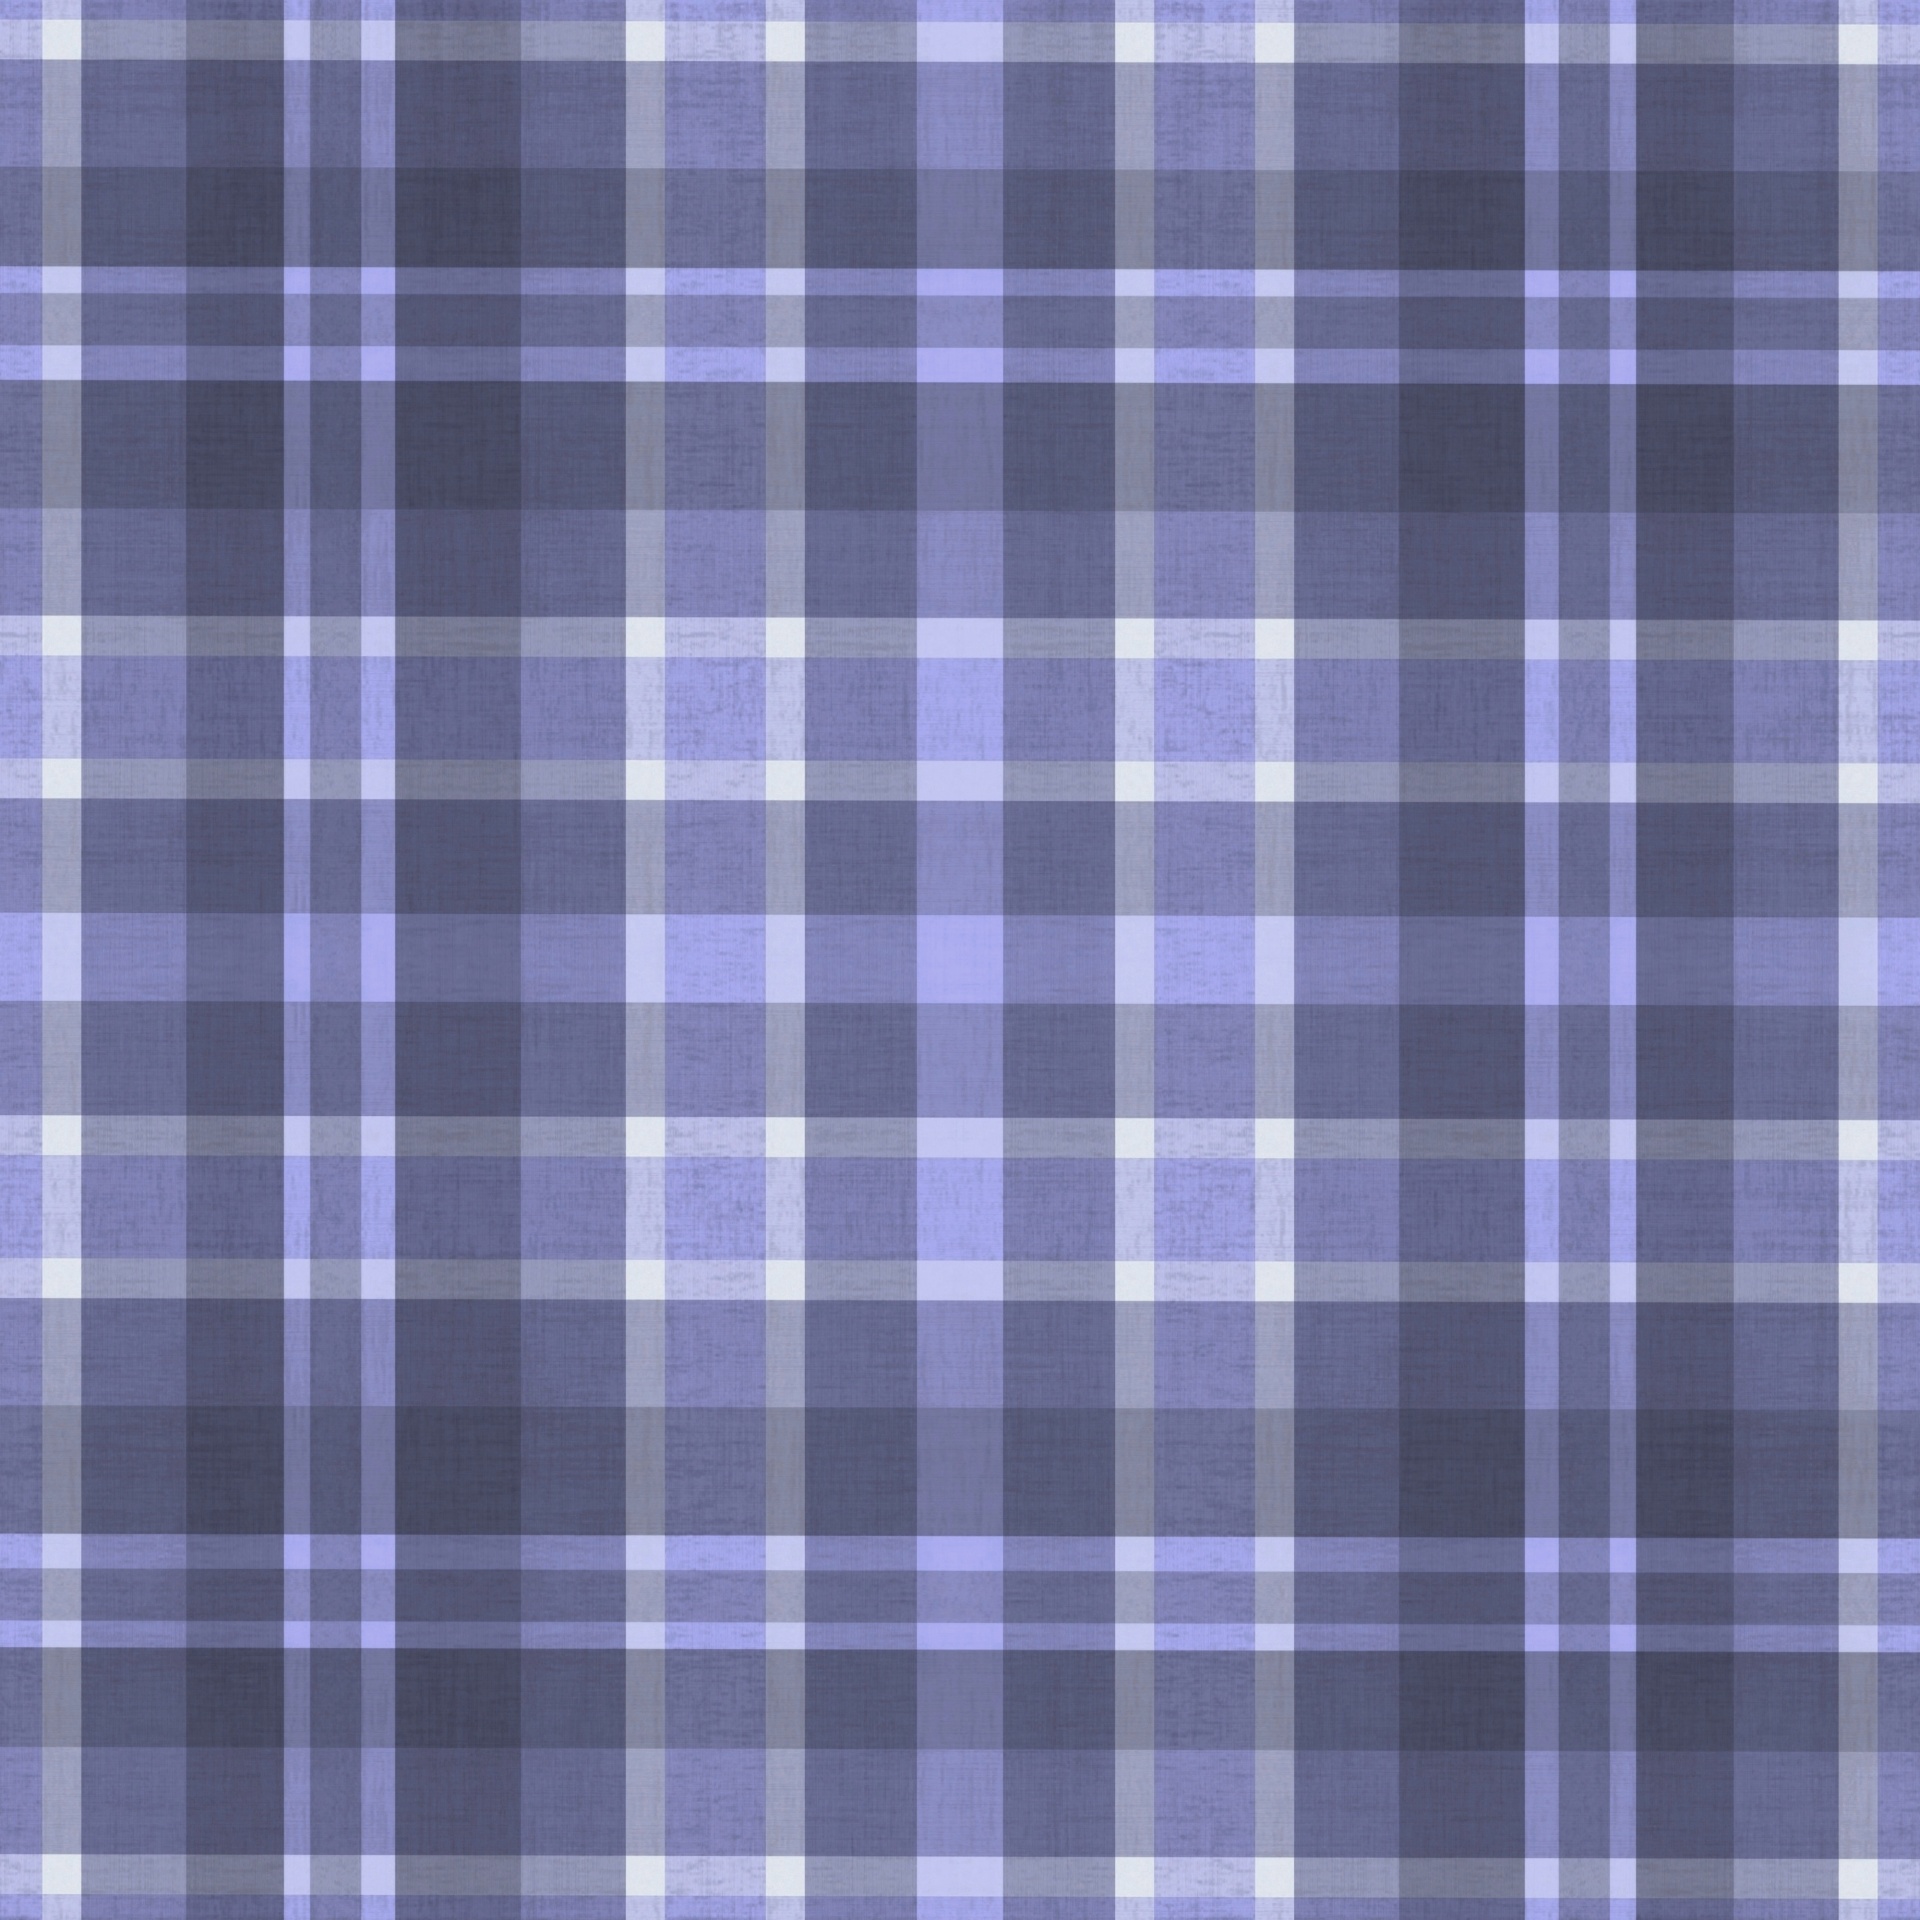 Plaid checkered checks pattern digital background